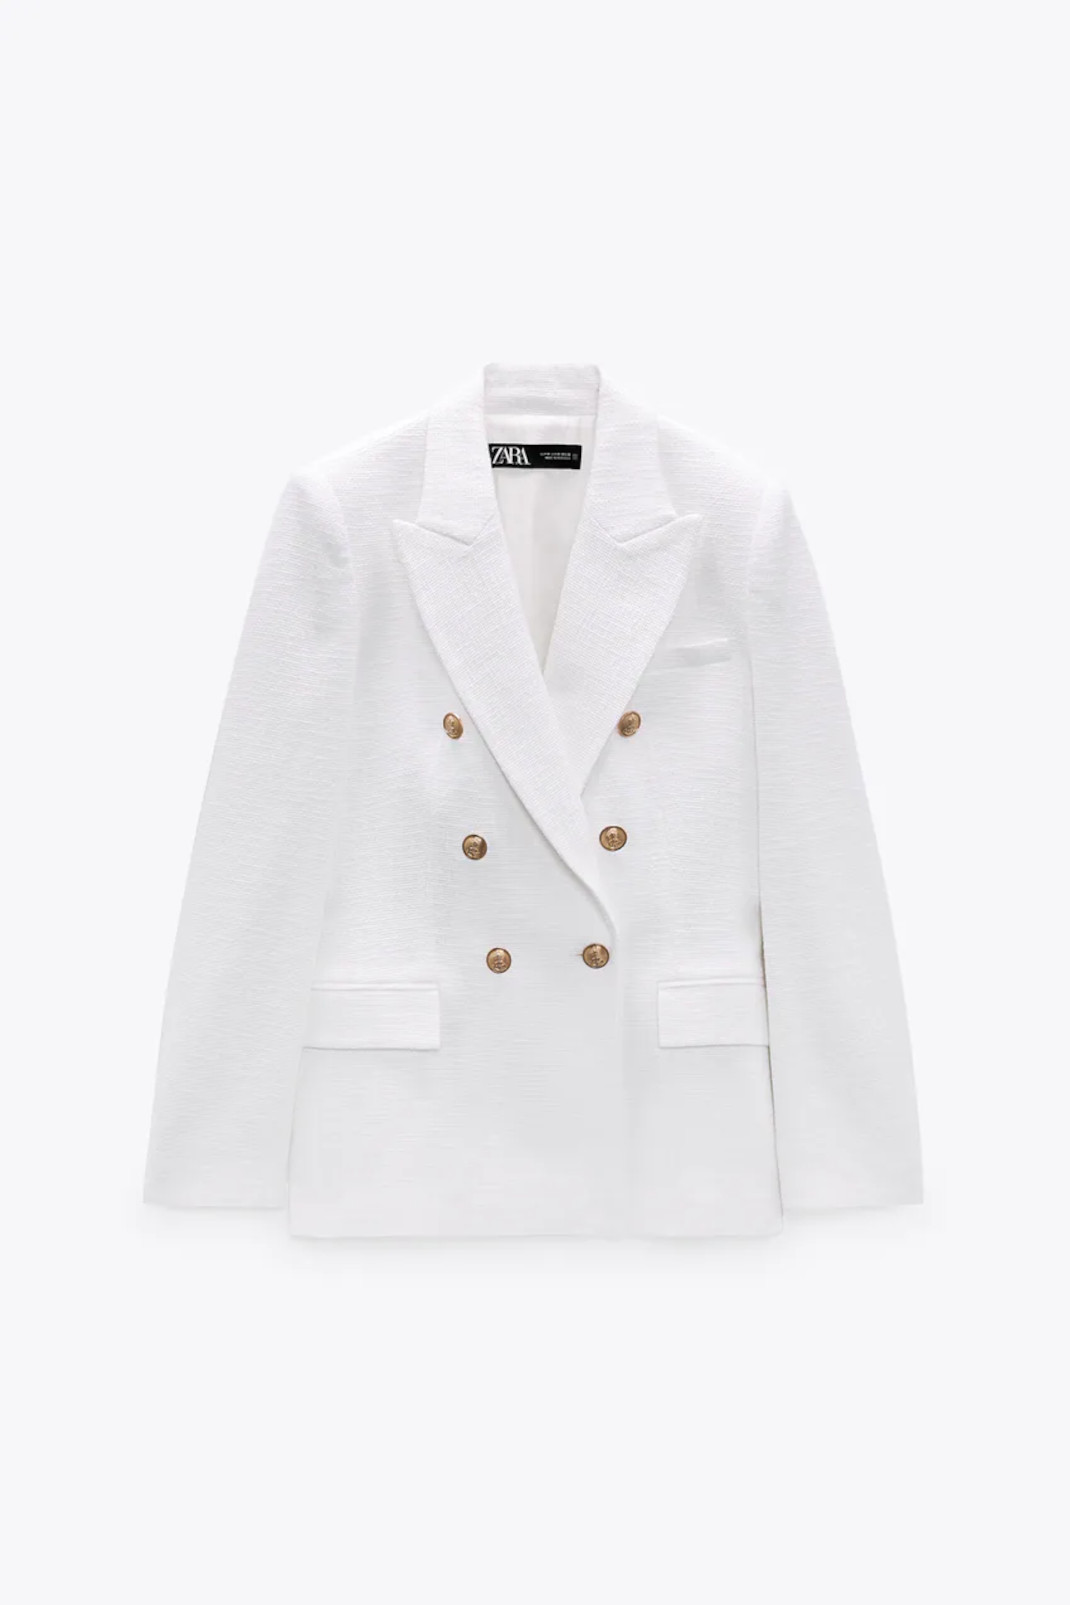 H Mάρα Ζαχαρέα με λευκό κοστούμι Zara -Η διαχρονική επιλογή για τα office looks 